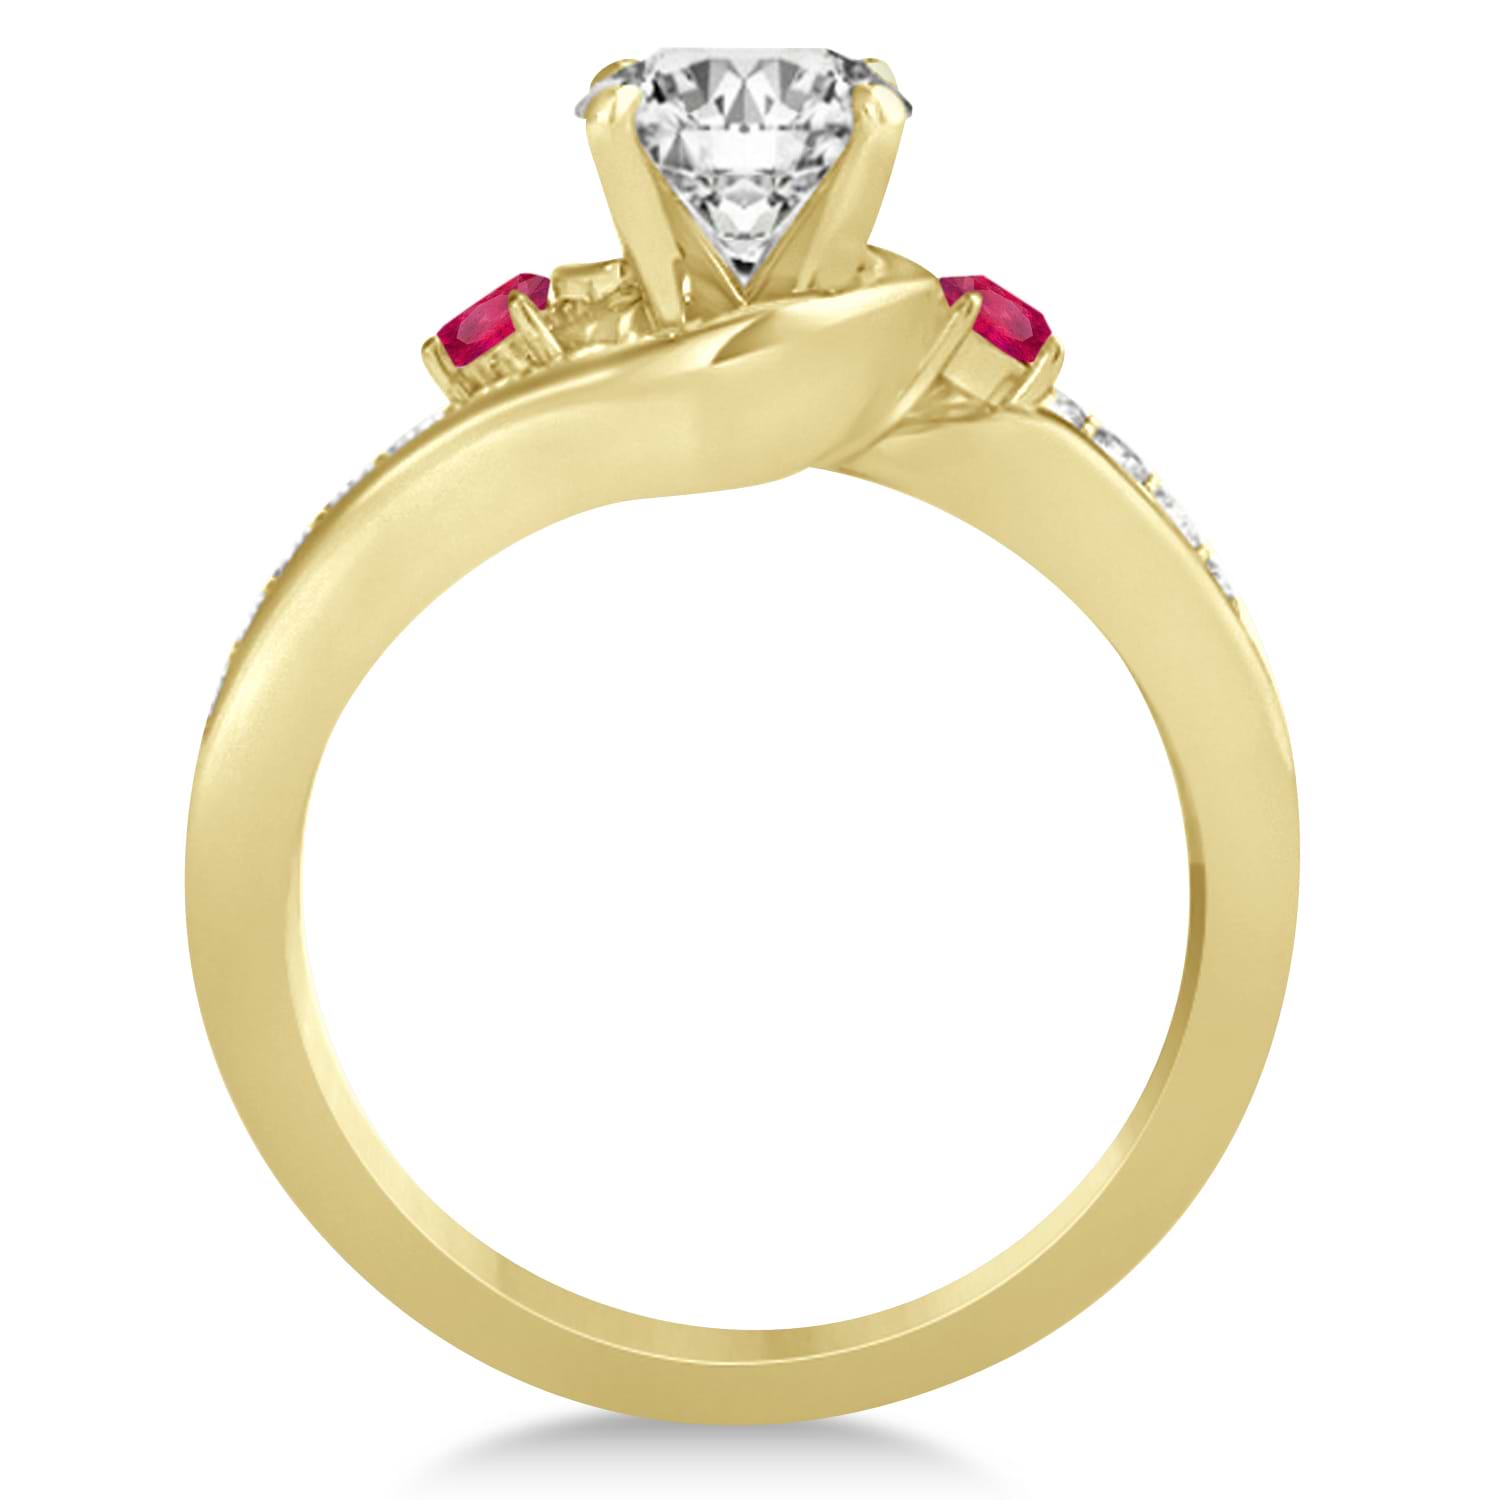 Ruby & Diamond Swirl Engagement Ring & Band Bridal Set 18k Yellow Gold 0.58ct